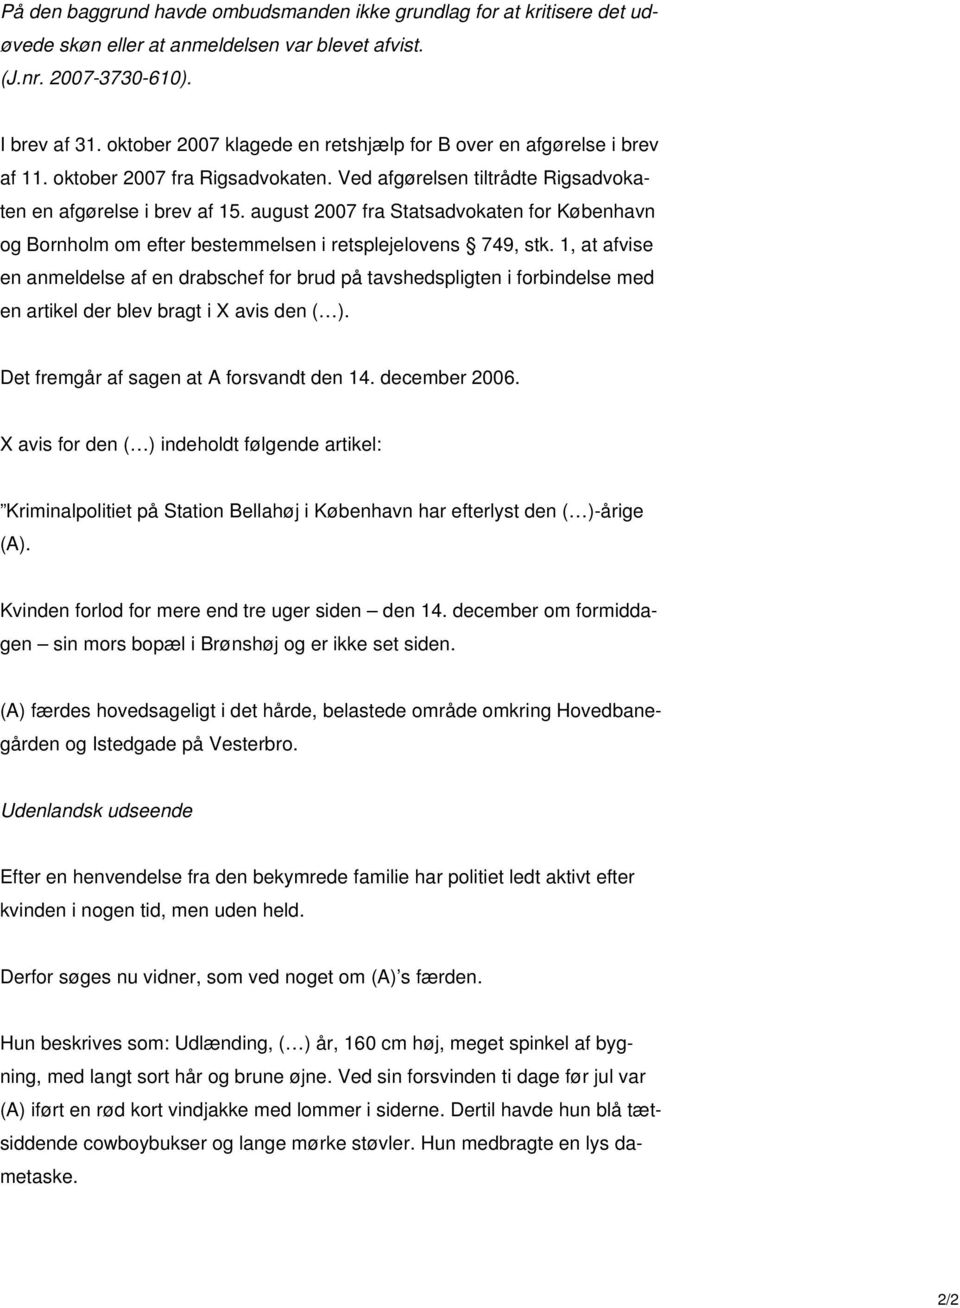 august 2007 fra Statsadvokaten for København og Bornholm om efter bestemmelsen i retsplejelovens 749, stk.